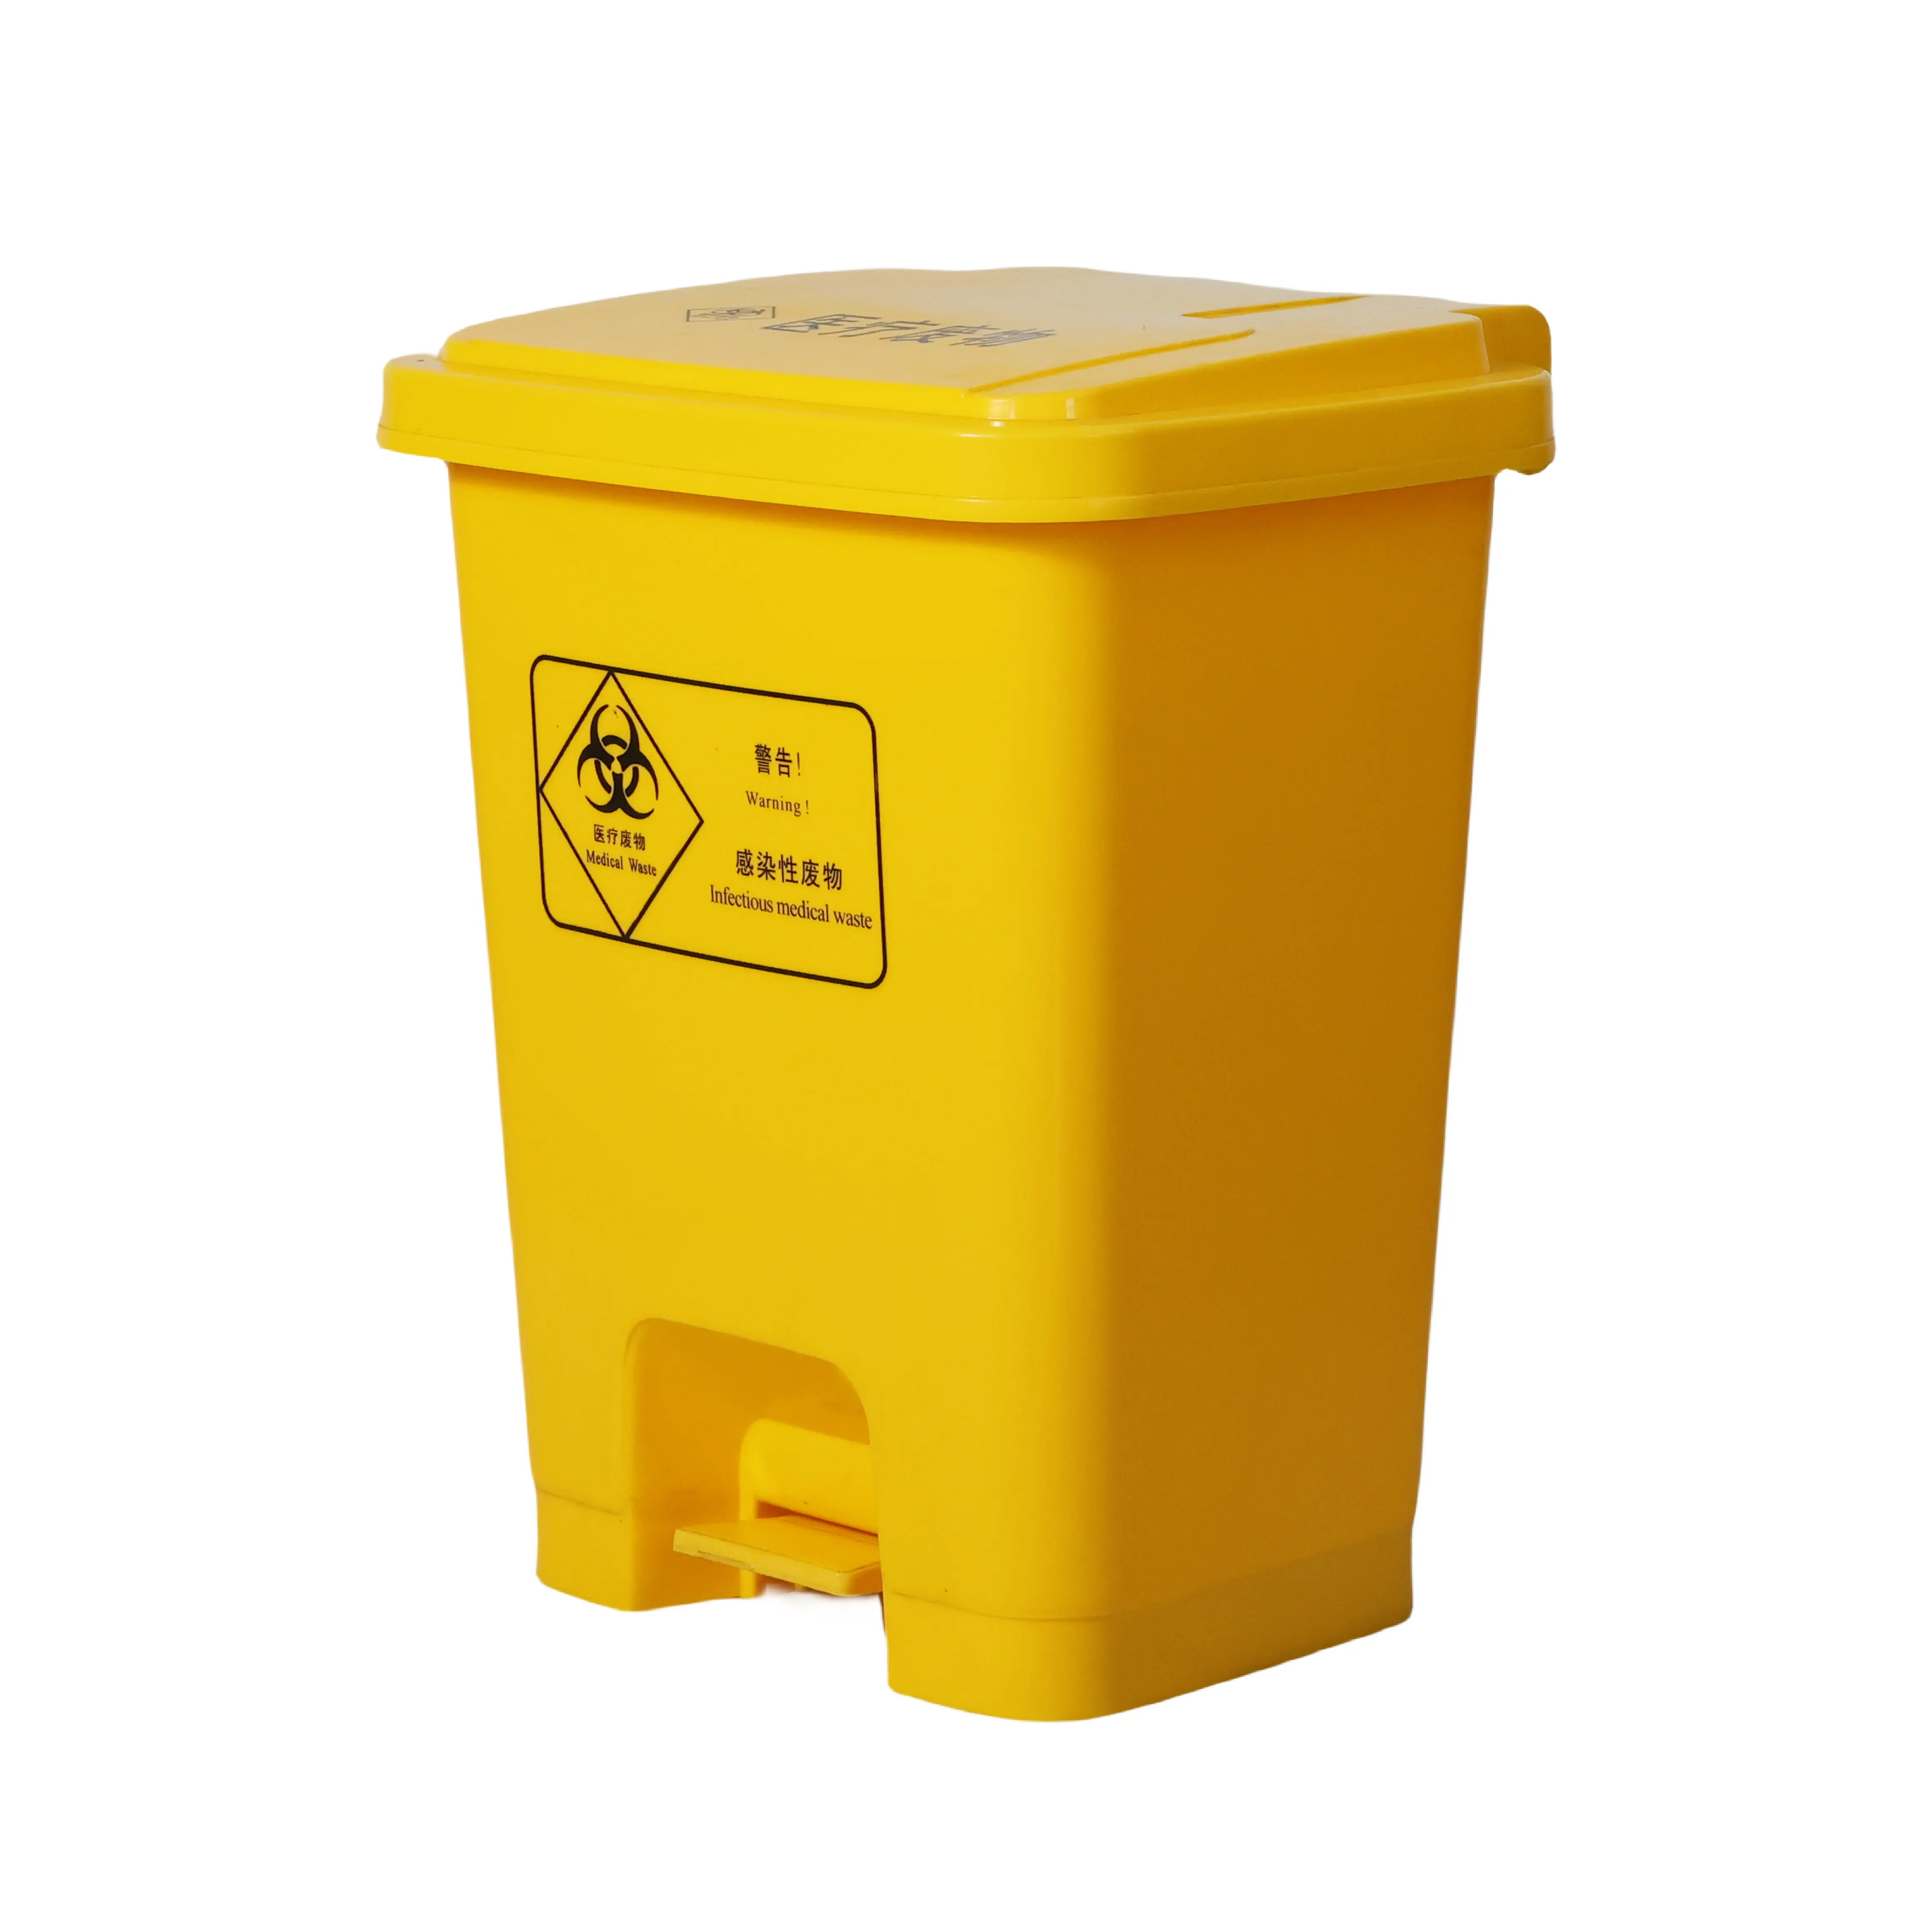 piso em latas de lixo de grau hospitalar e lixeira amarela de 30 litros e recipiente de lixo eficaz